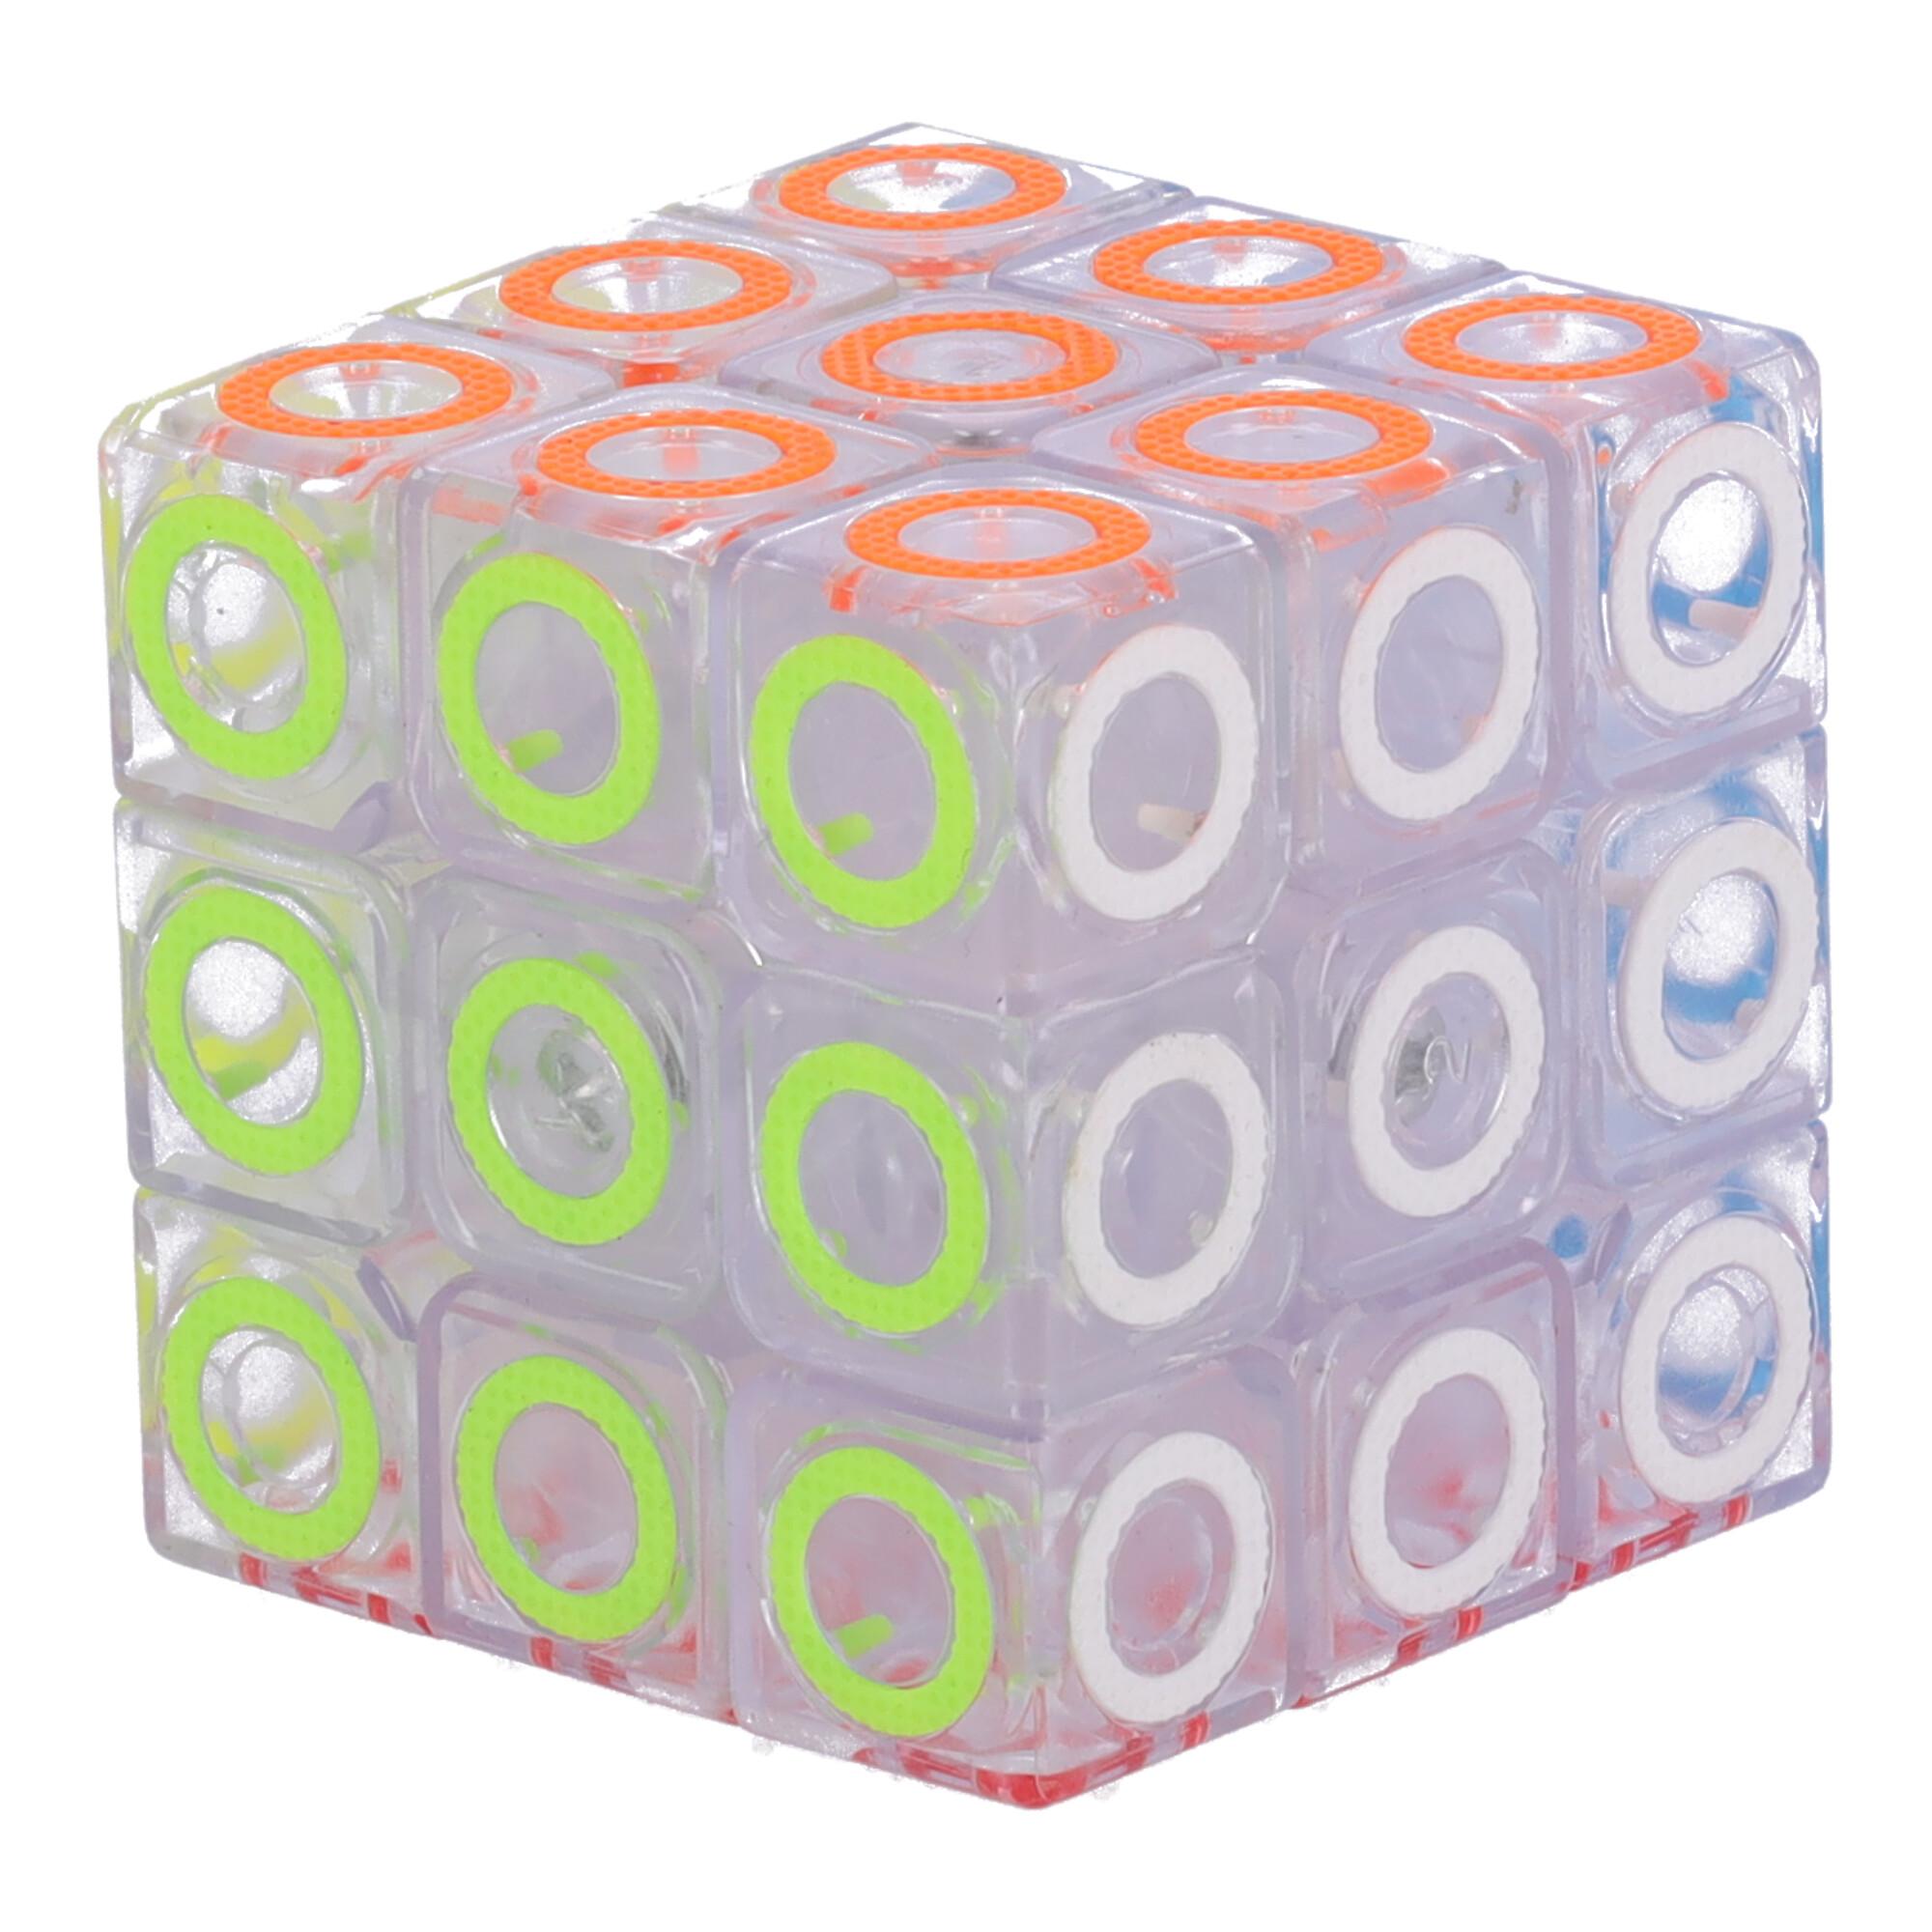 Modern jigsaw puzzle, Rubik's Cube - type IV